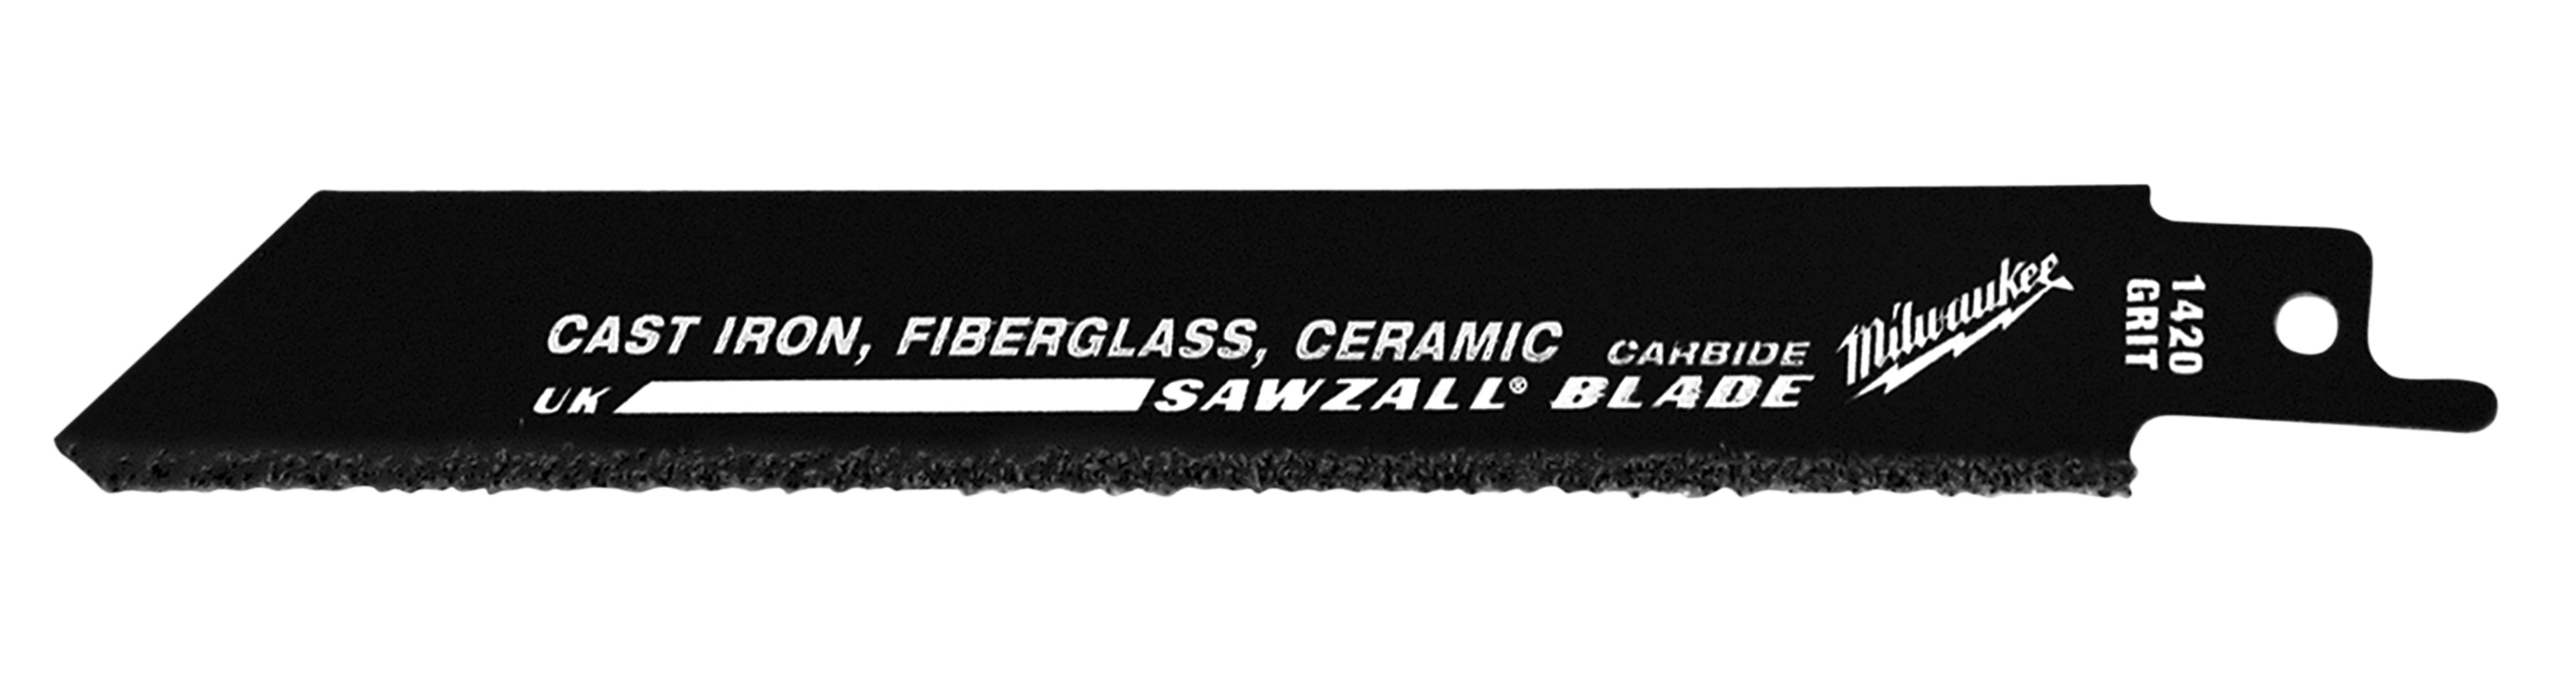 6 in. Carbide Grit SAWZALL Blade - 50 Pack